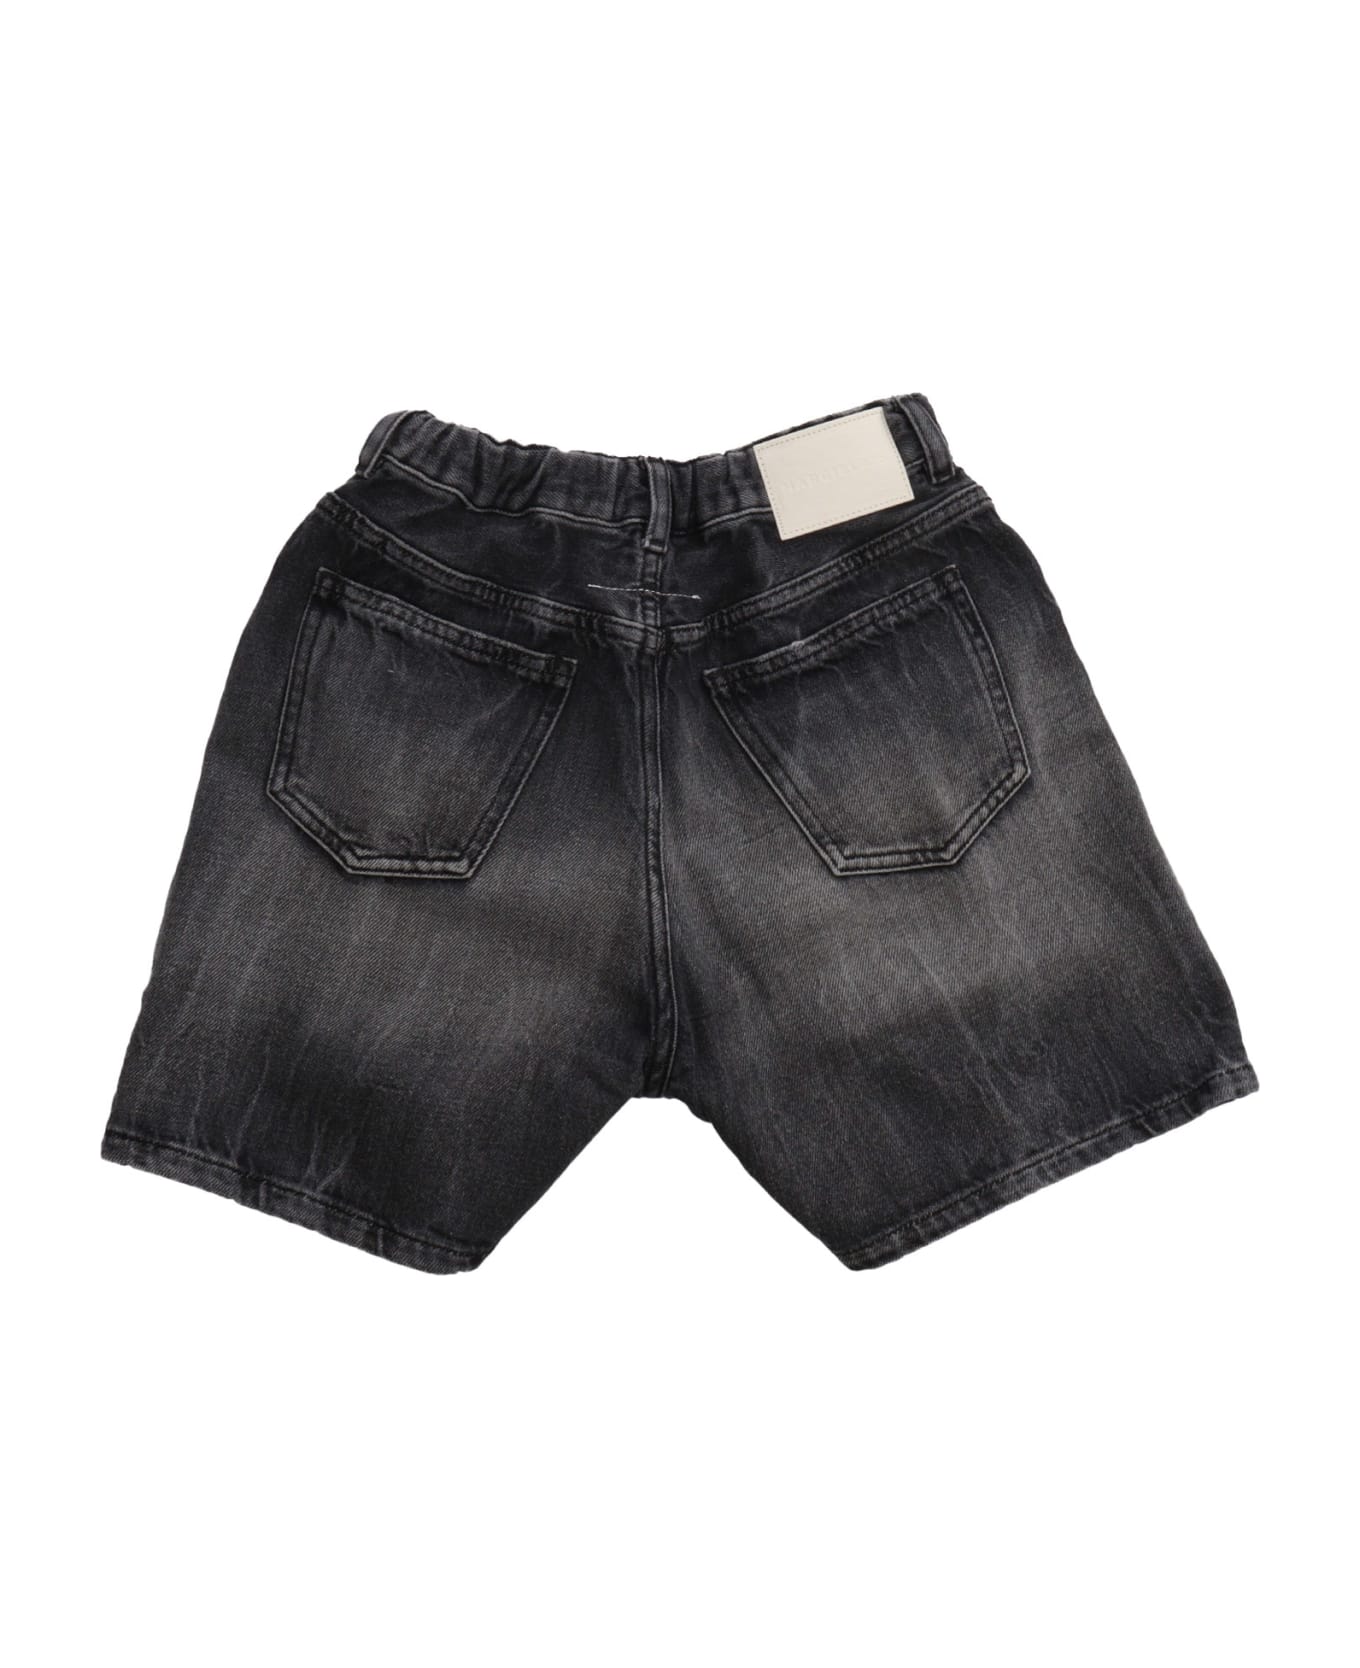 MM6 Maison Margiela Black Denim Shorts - BLACK